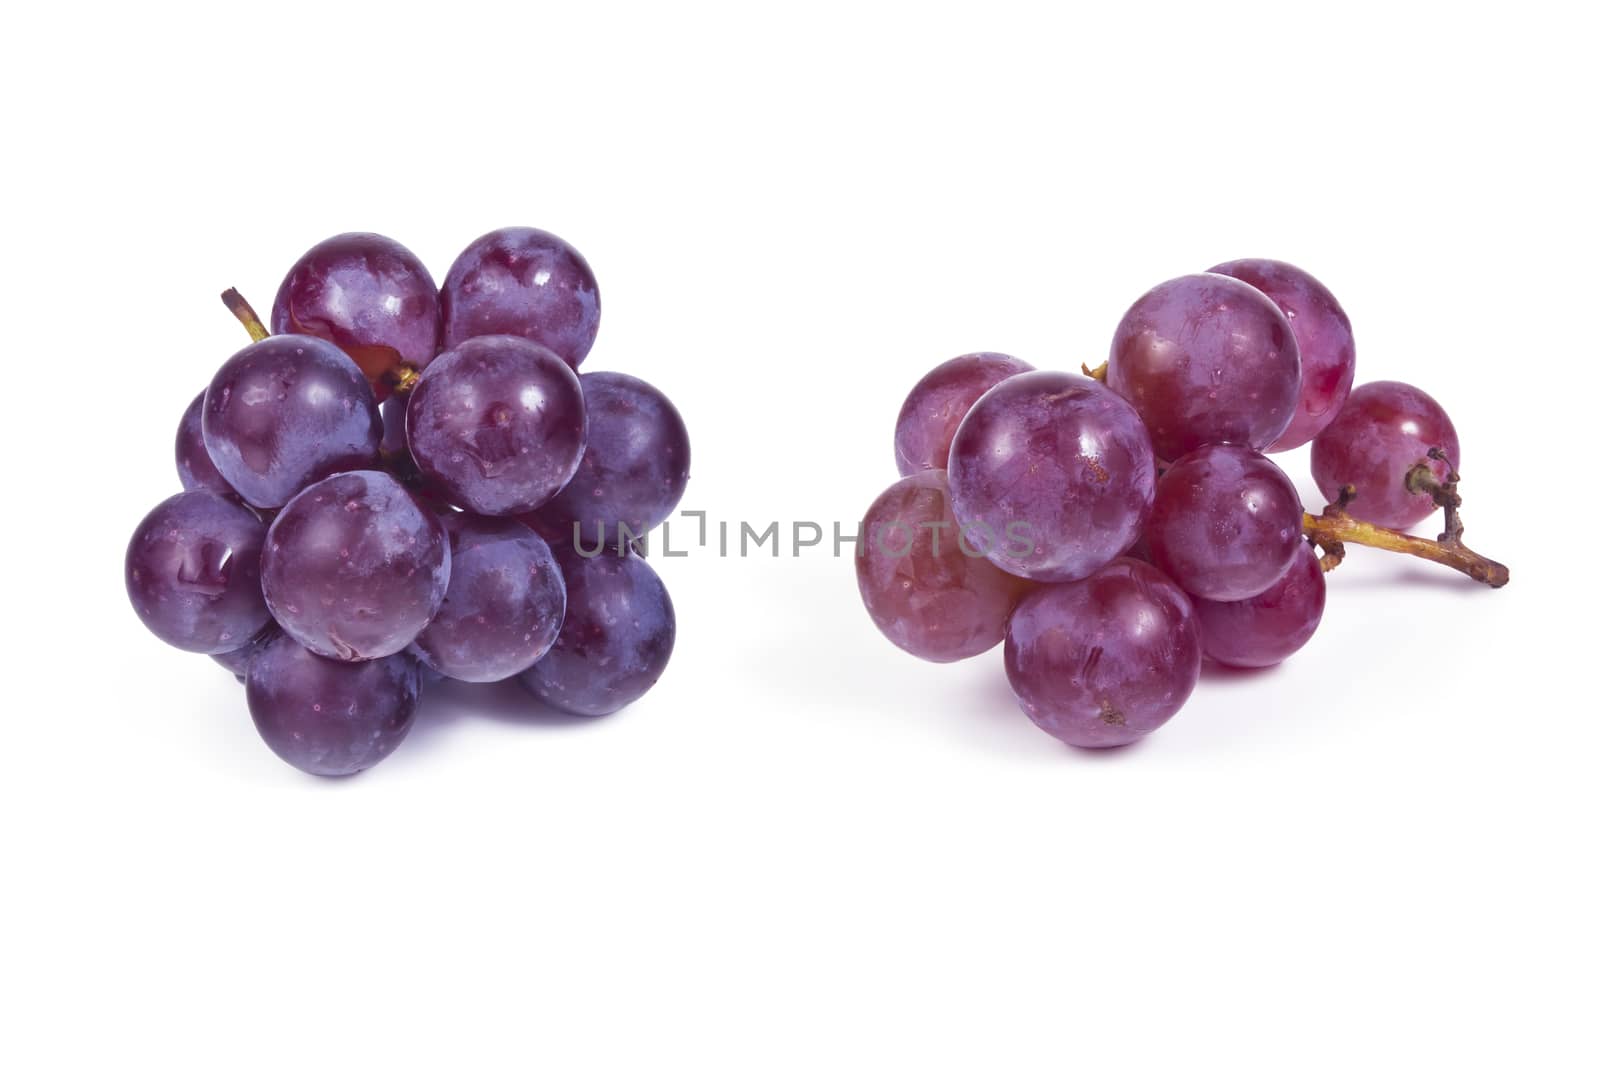 Dark grapes by pilotL39